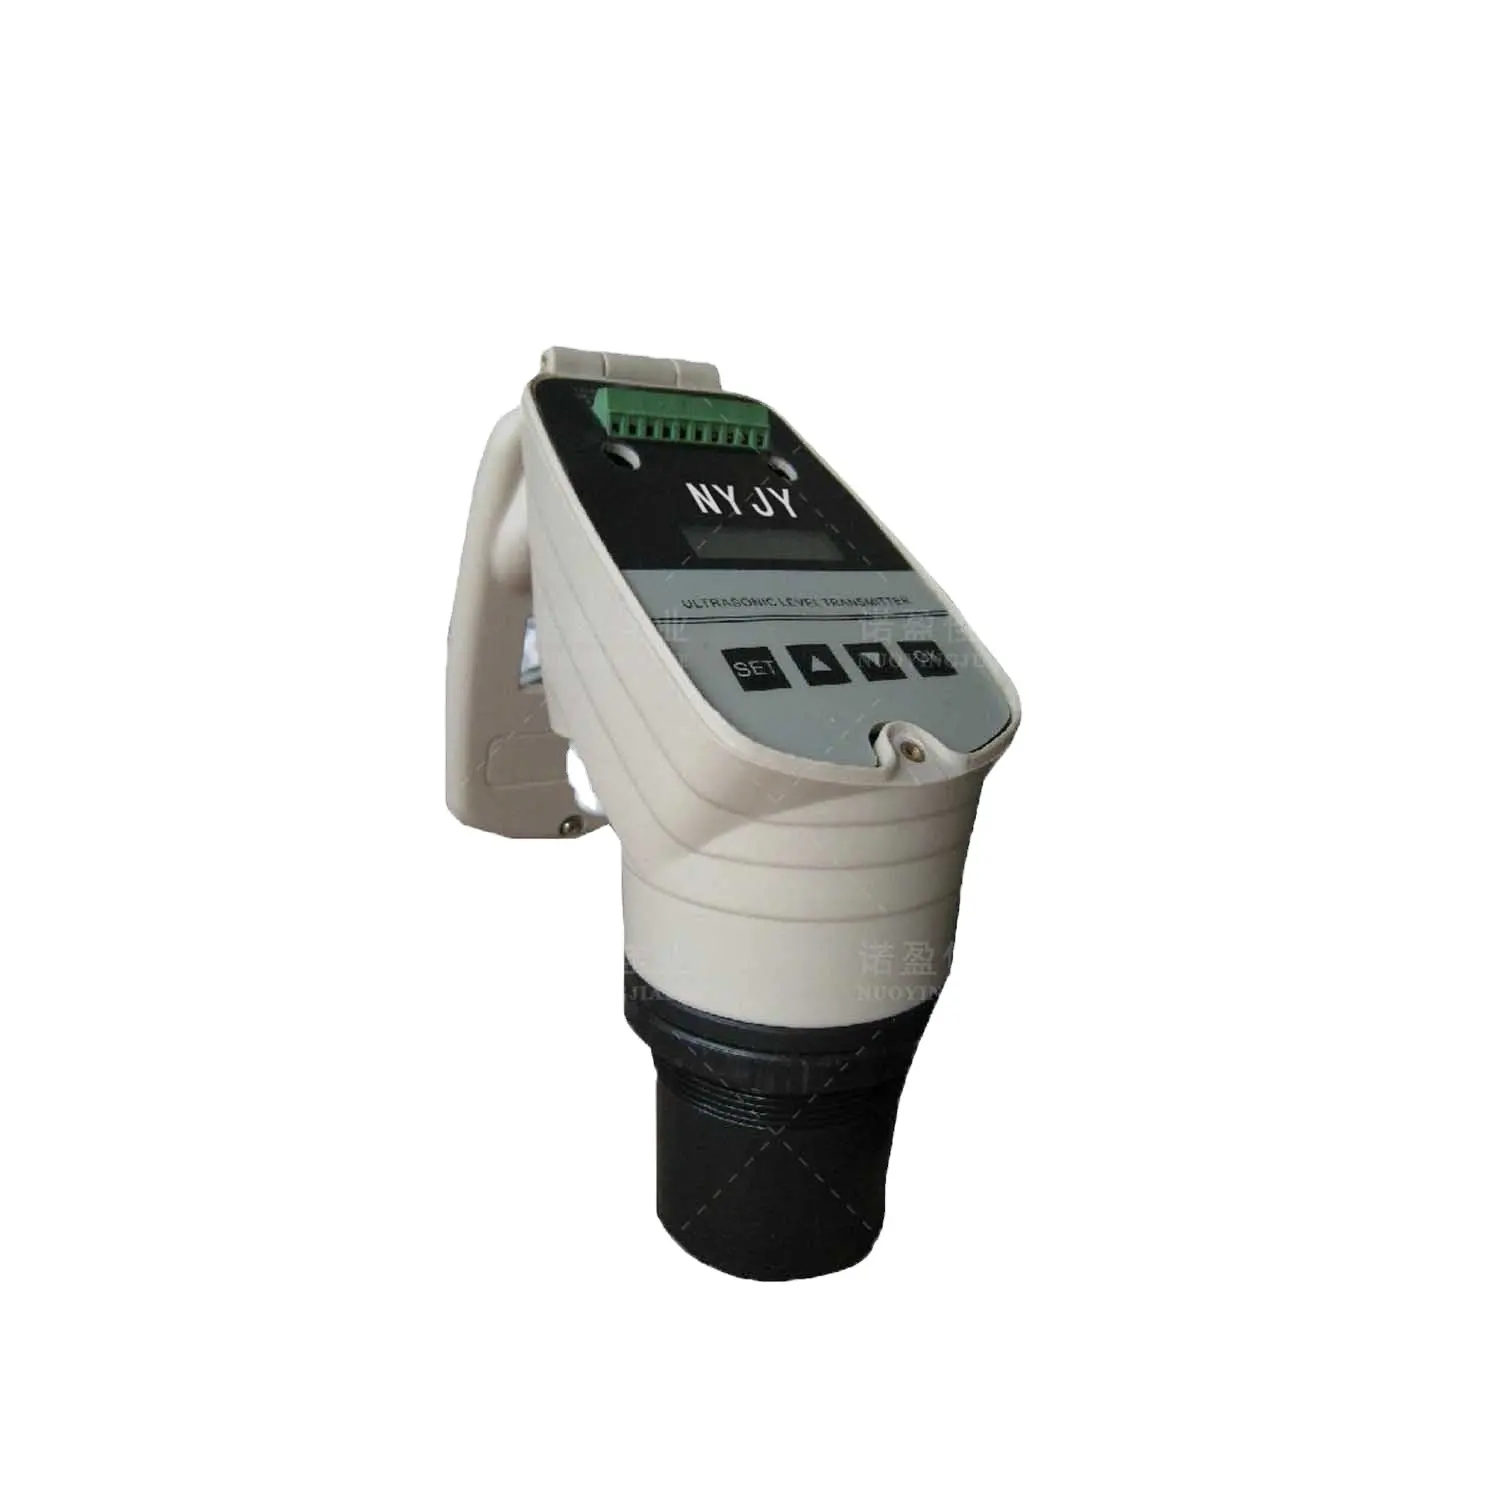 Nuoying waterproof ultrasonic water level sensor Factory Digital Level Gauge Water Tank Level Sensor